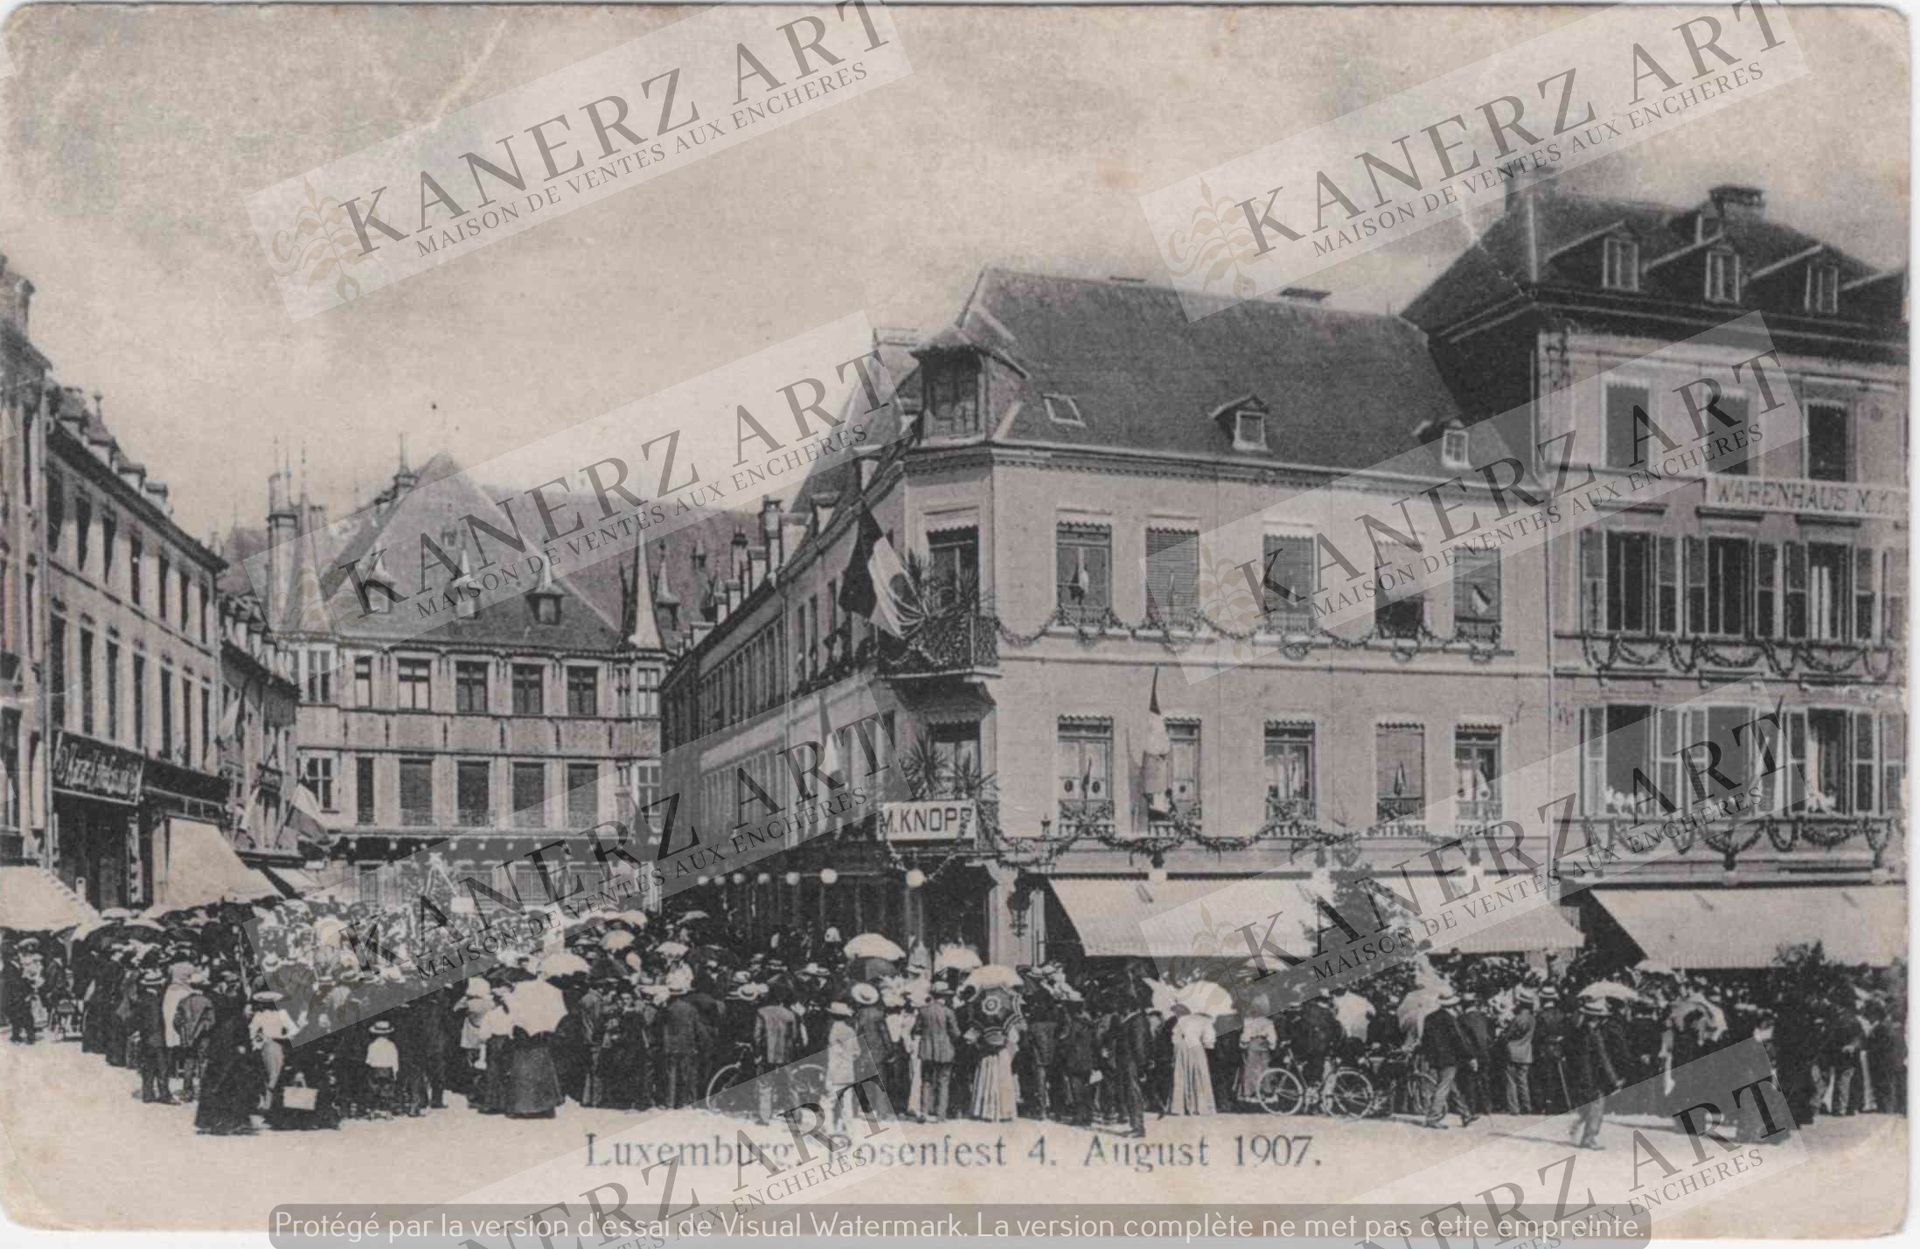 Null (OFICIAL) 2x Postal Rosenfest en Luxemburgo el 4 de agosto de 1907